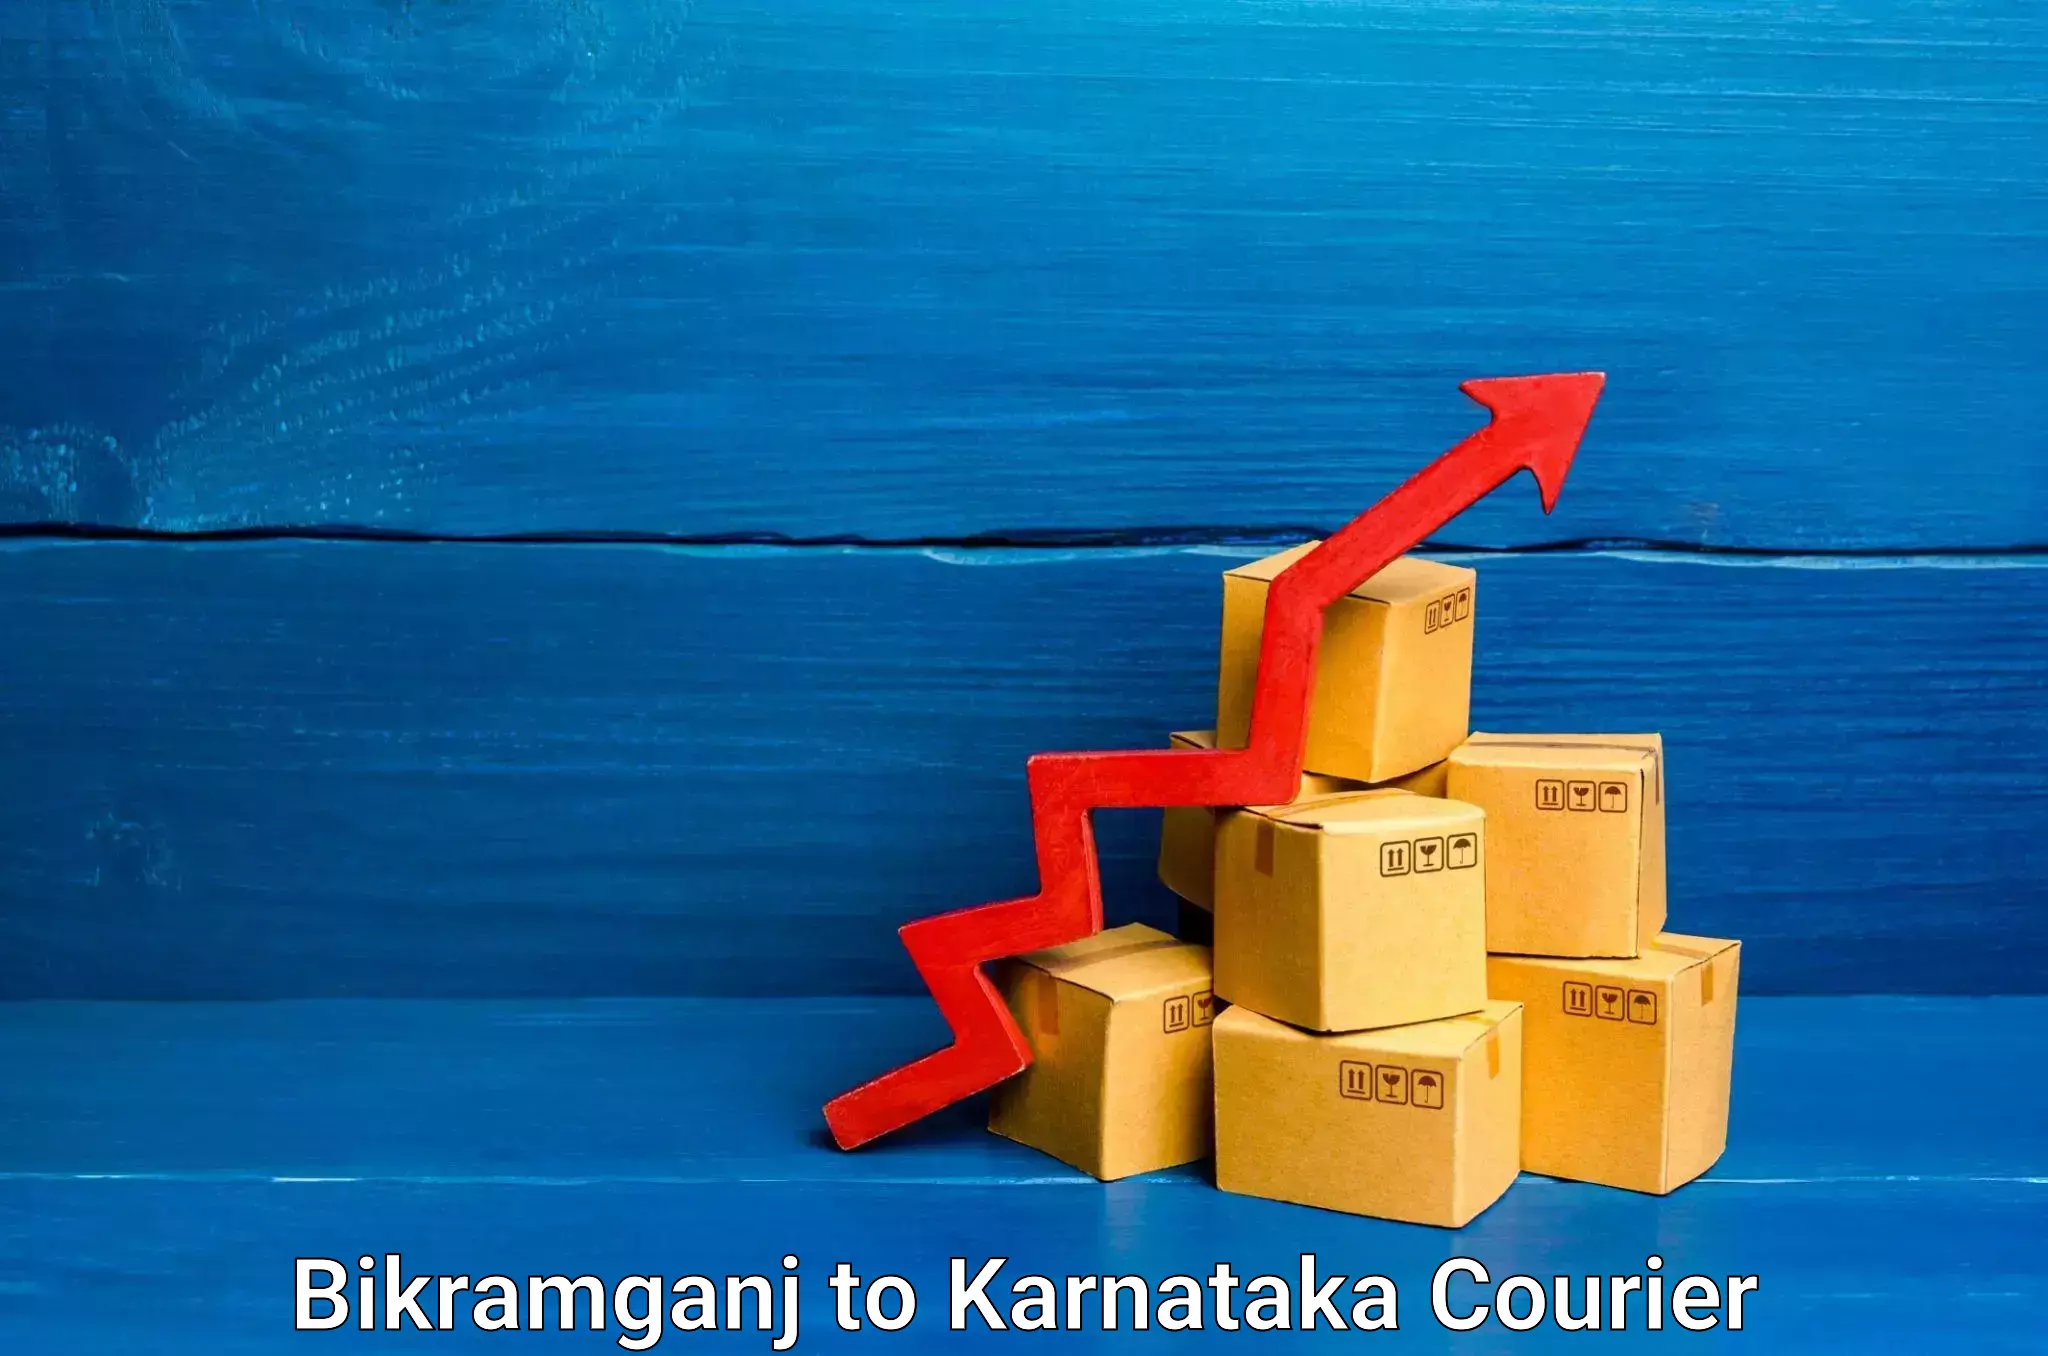 Specialized moving company Bikramganj to Ramanathapura